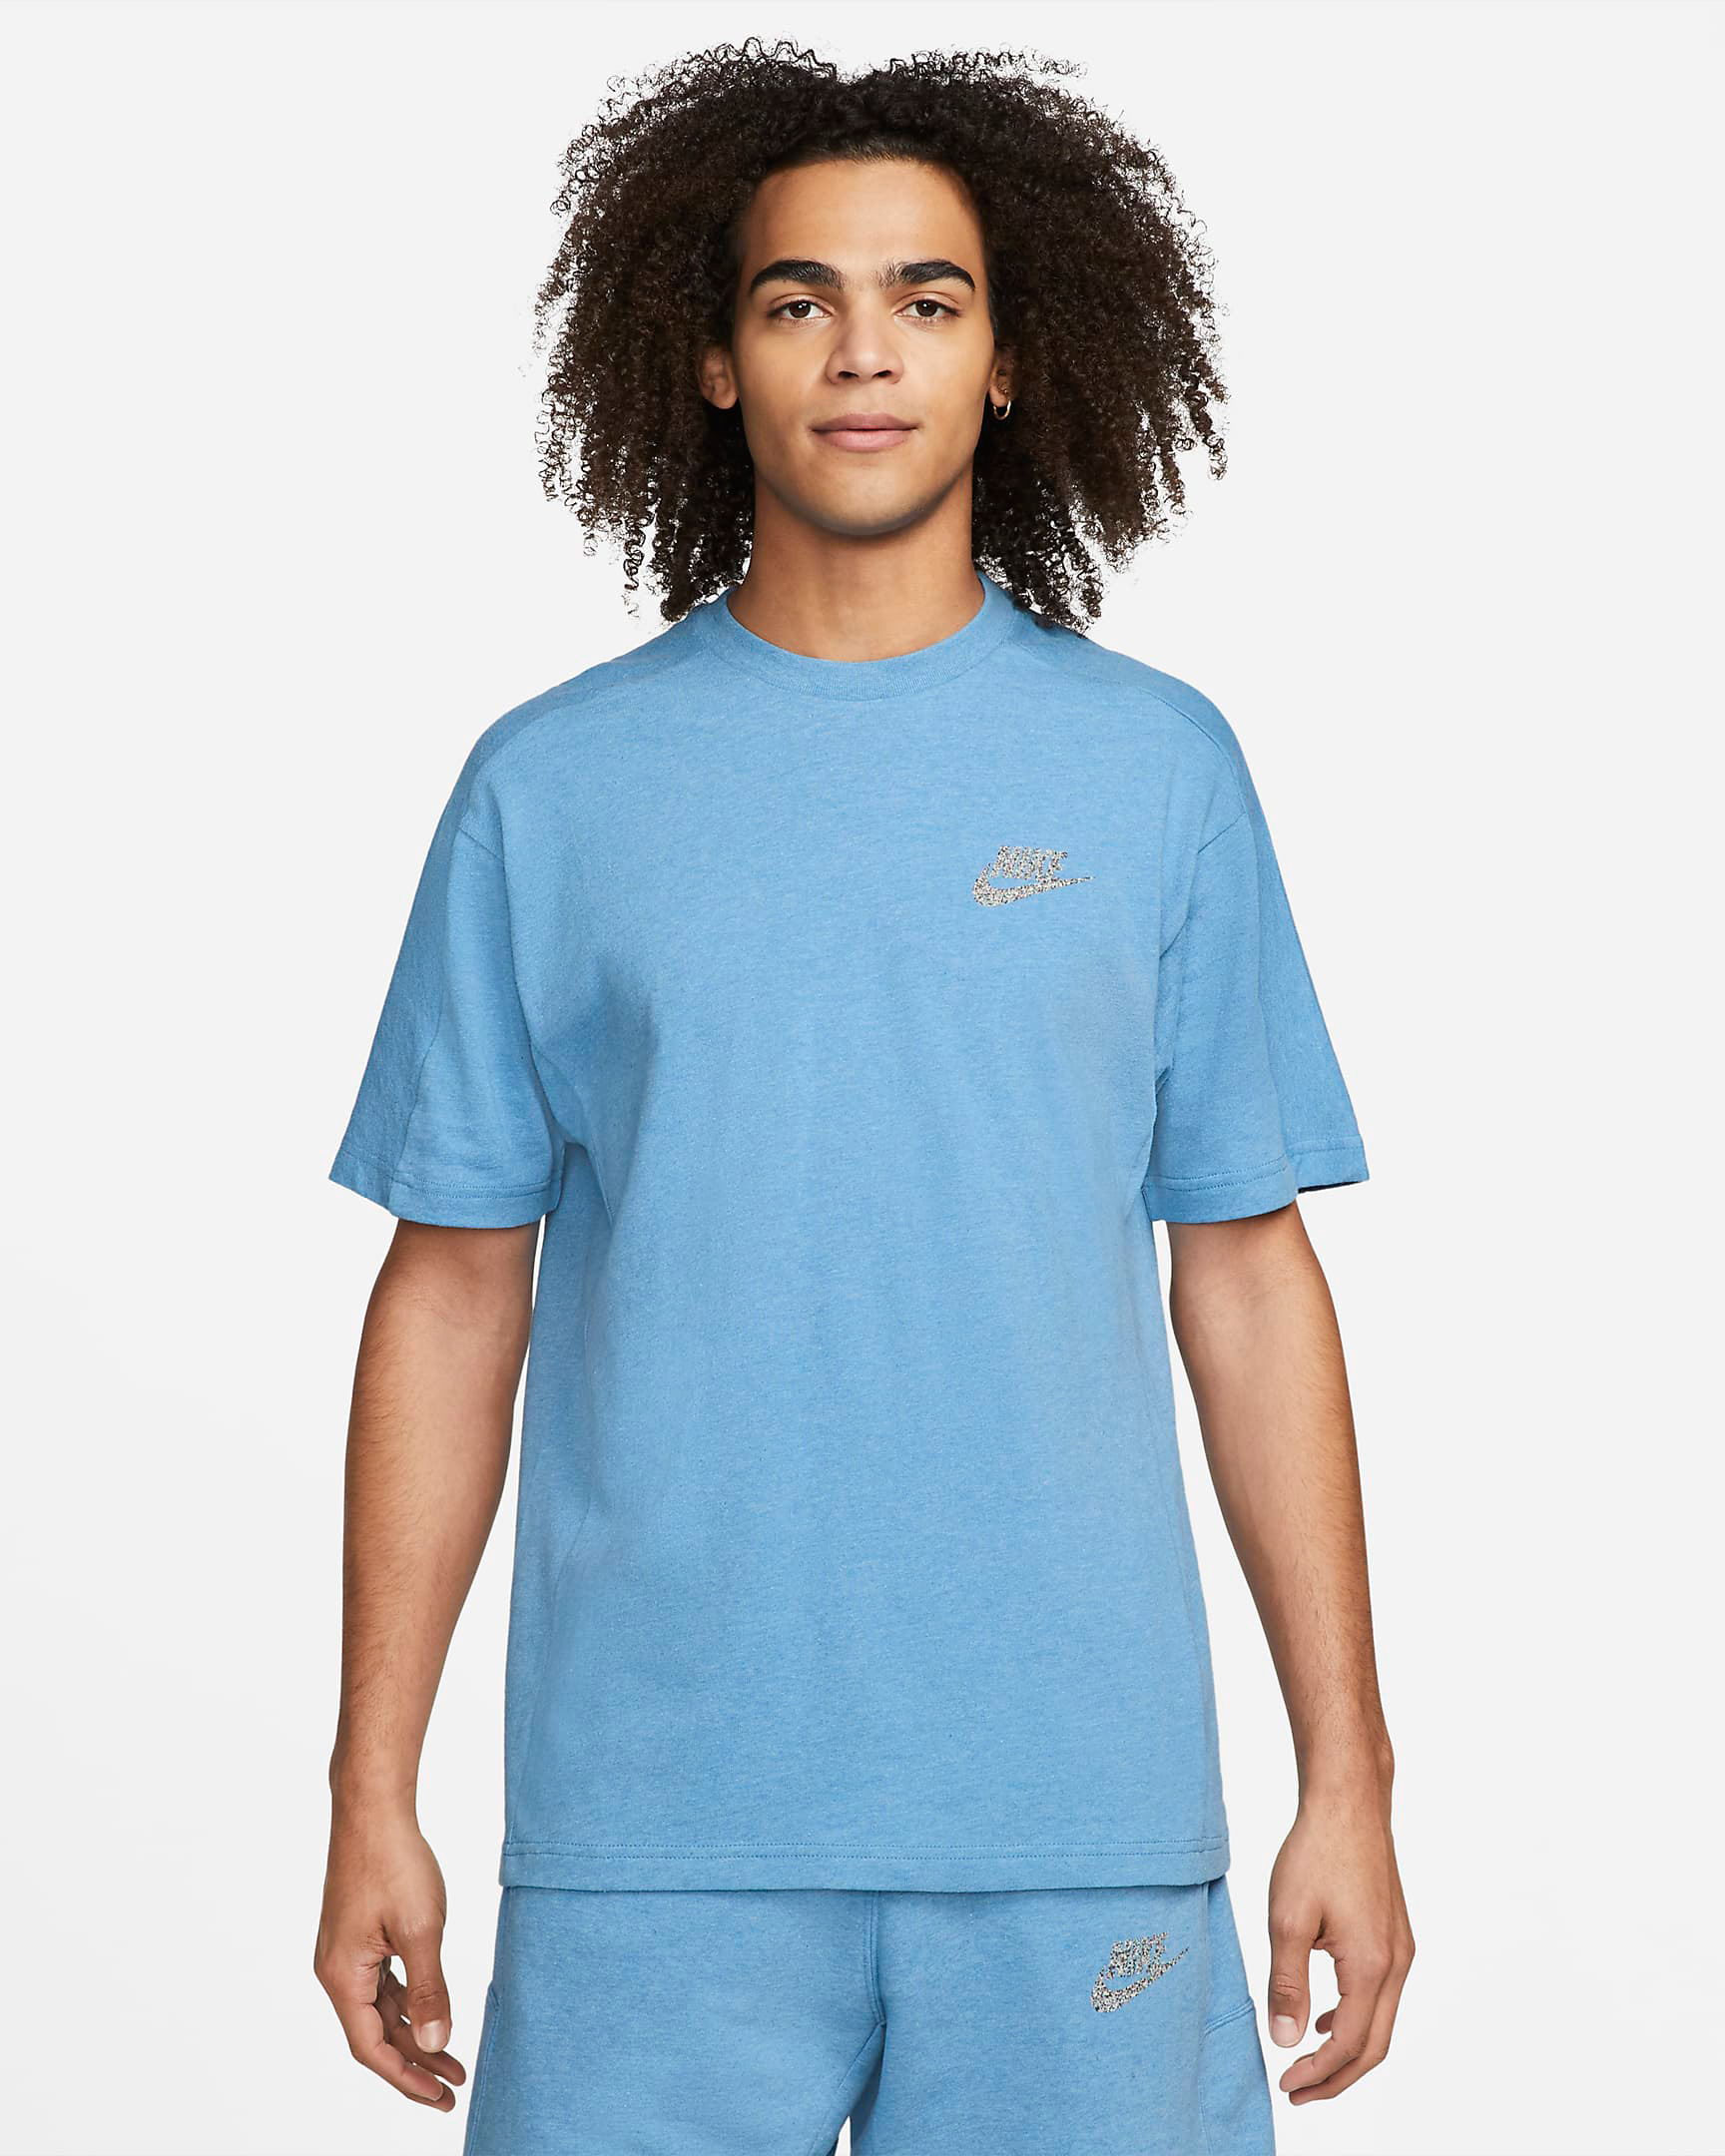 nike-sportswear-dutch-blue-shirt-1